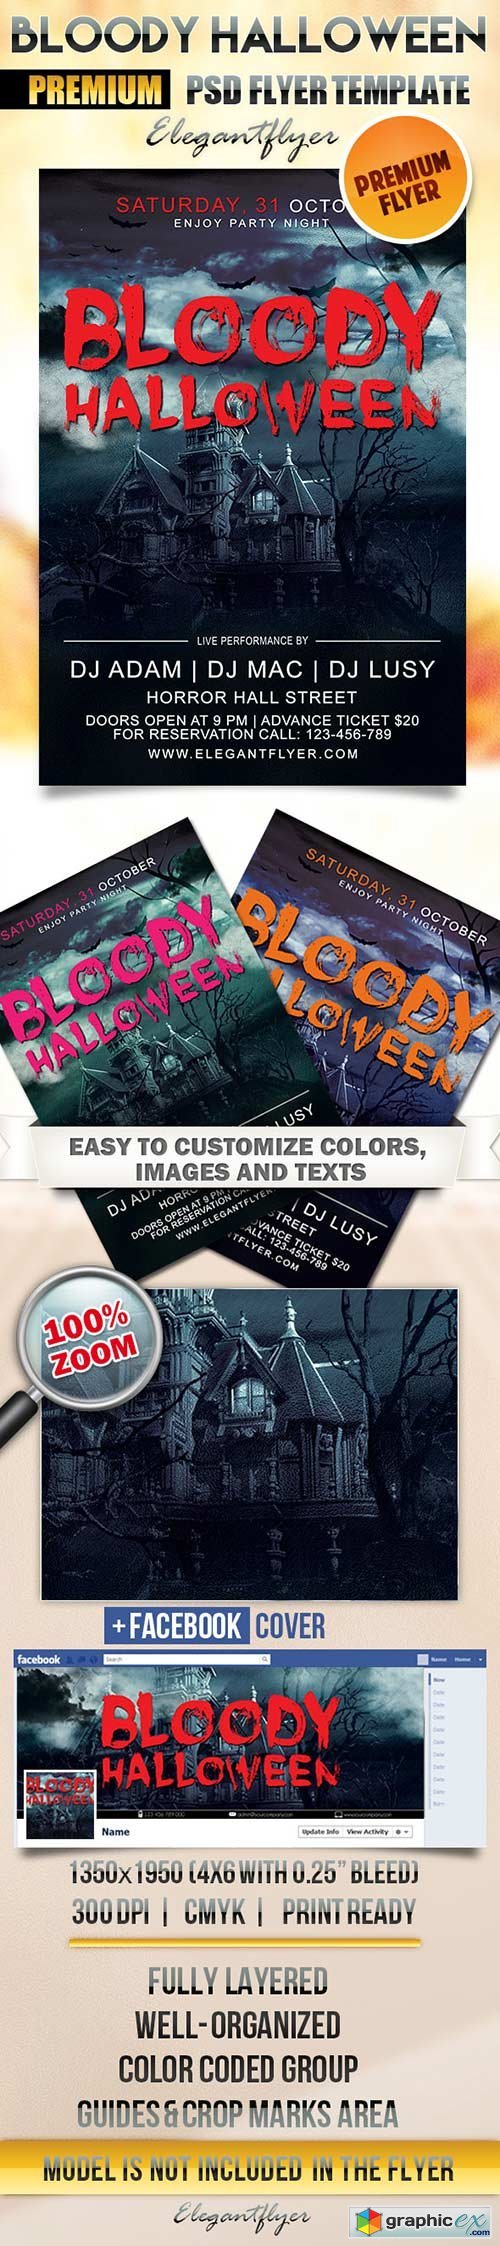 Bloody Halloween Flyer PSD Template + Facebook Cover